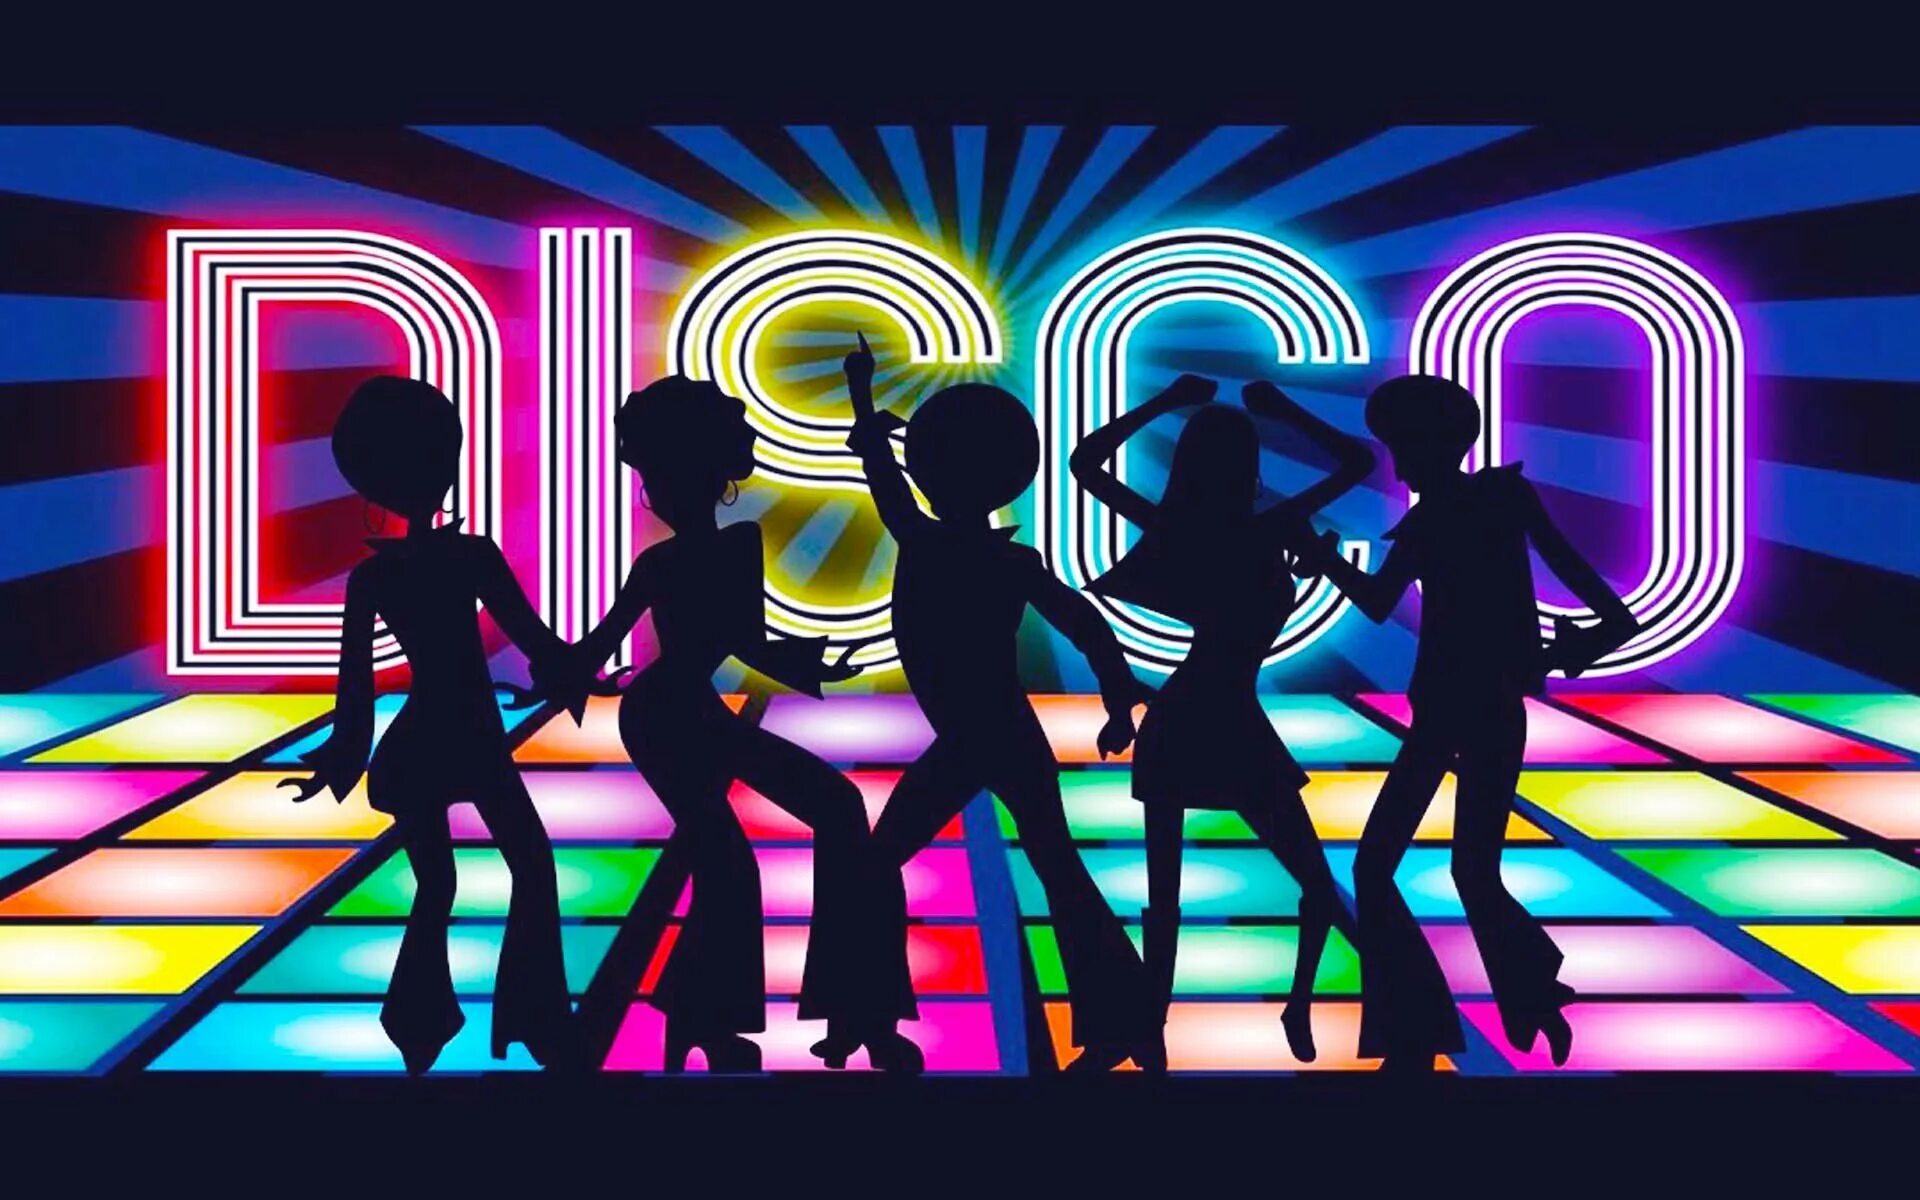 Disco dance remix. Диско танцы. Стиль диско. Дискотека в стиле 80-х. Фон в стиле диско.